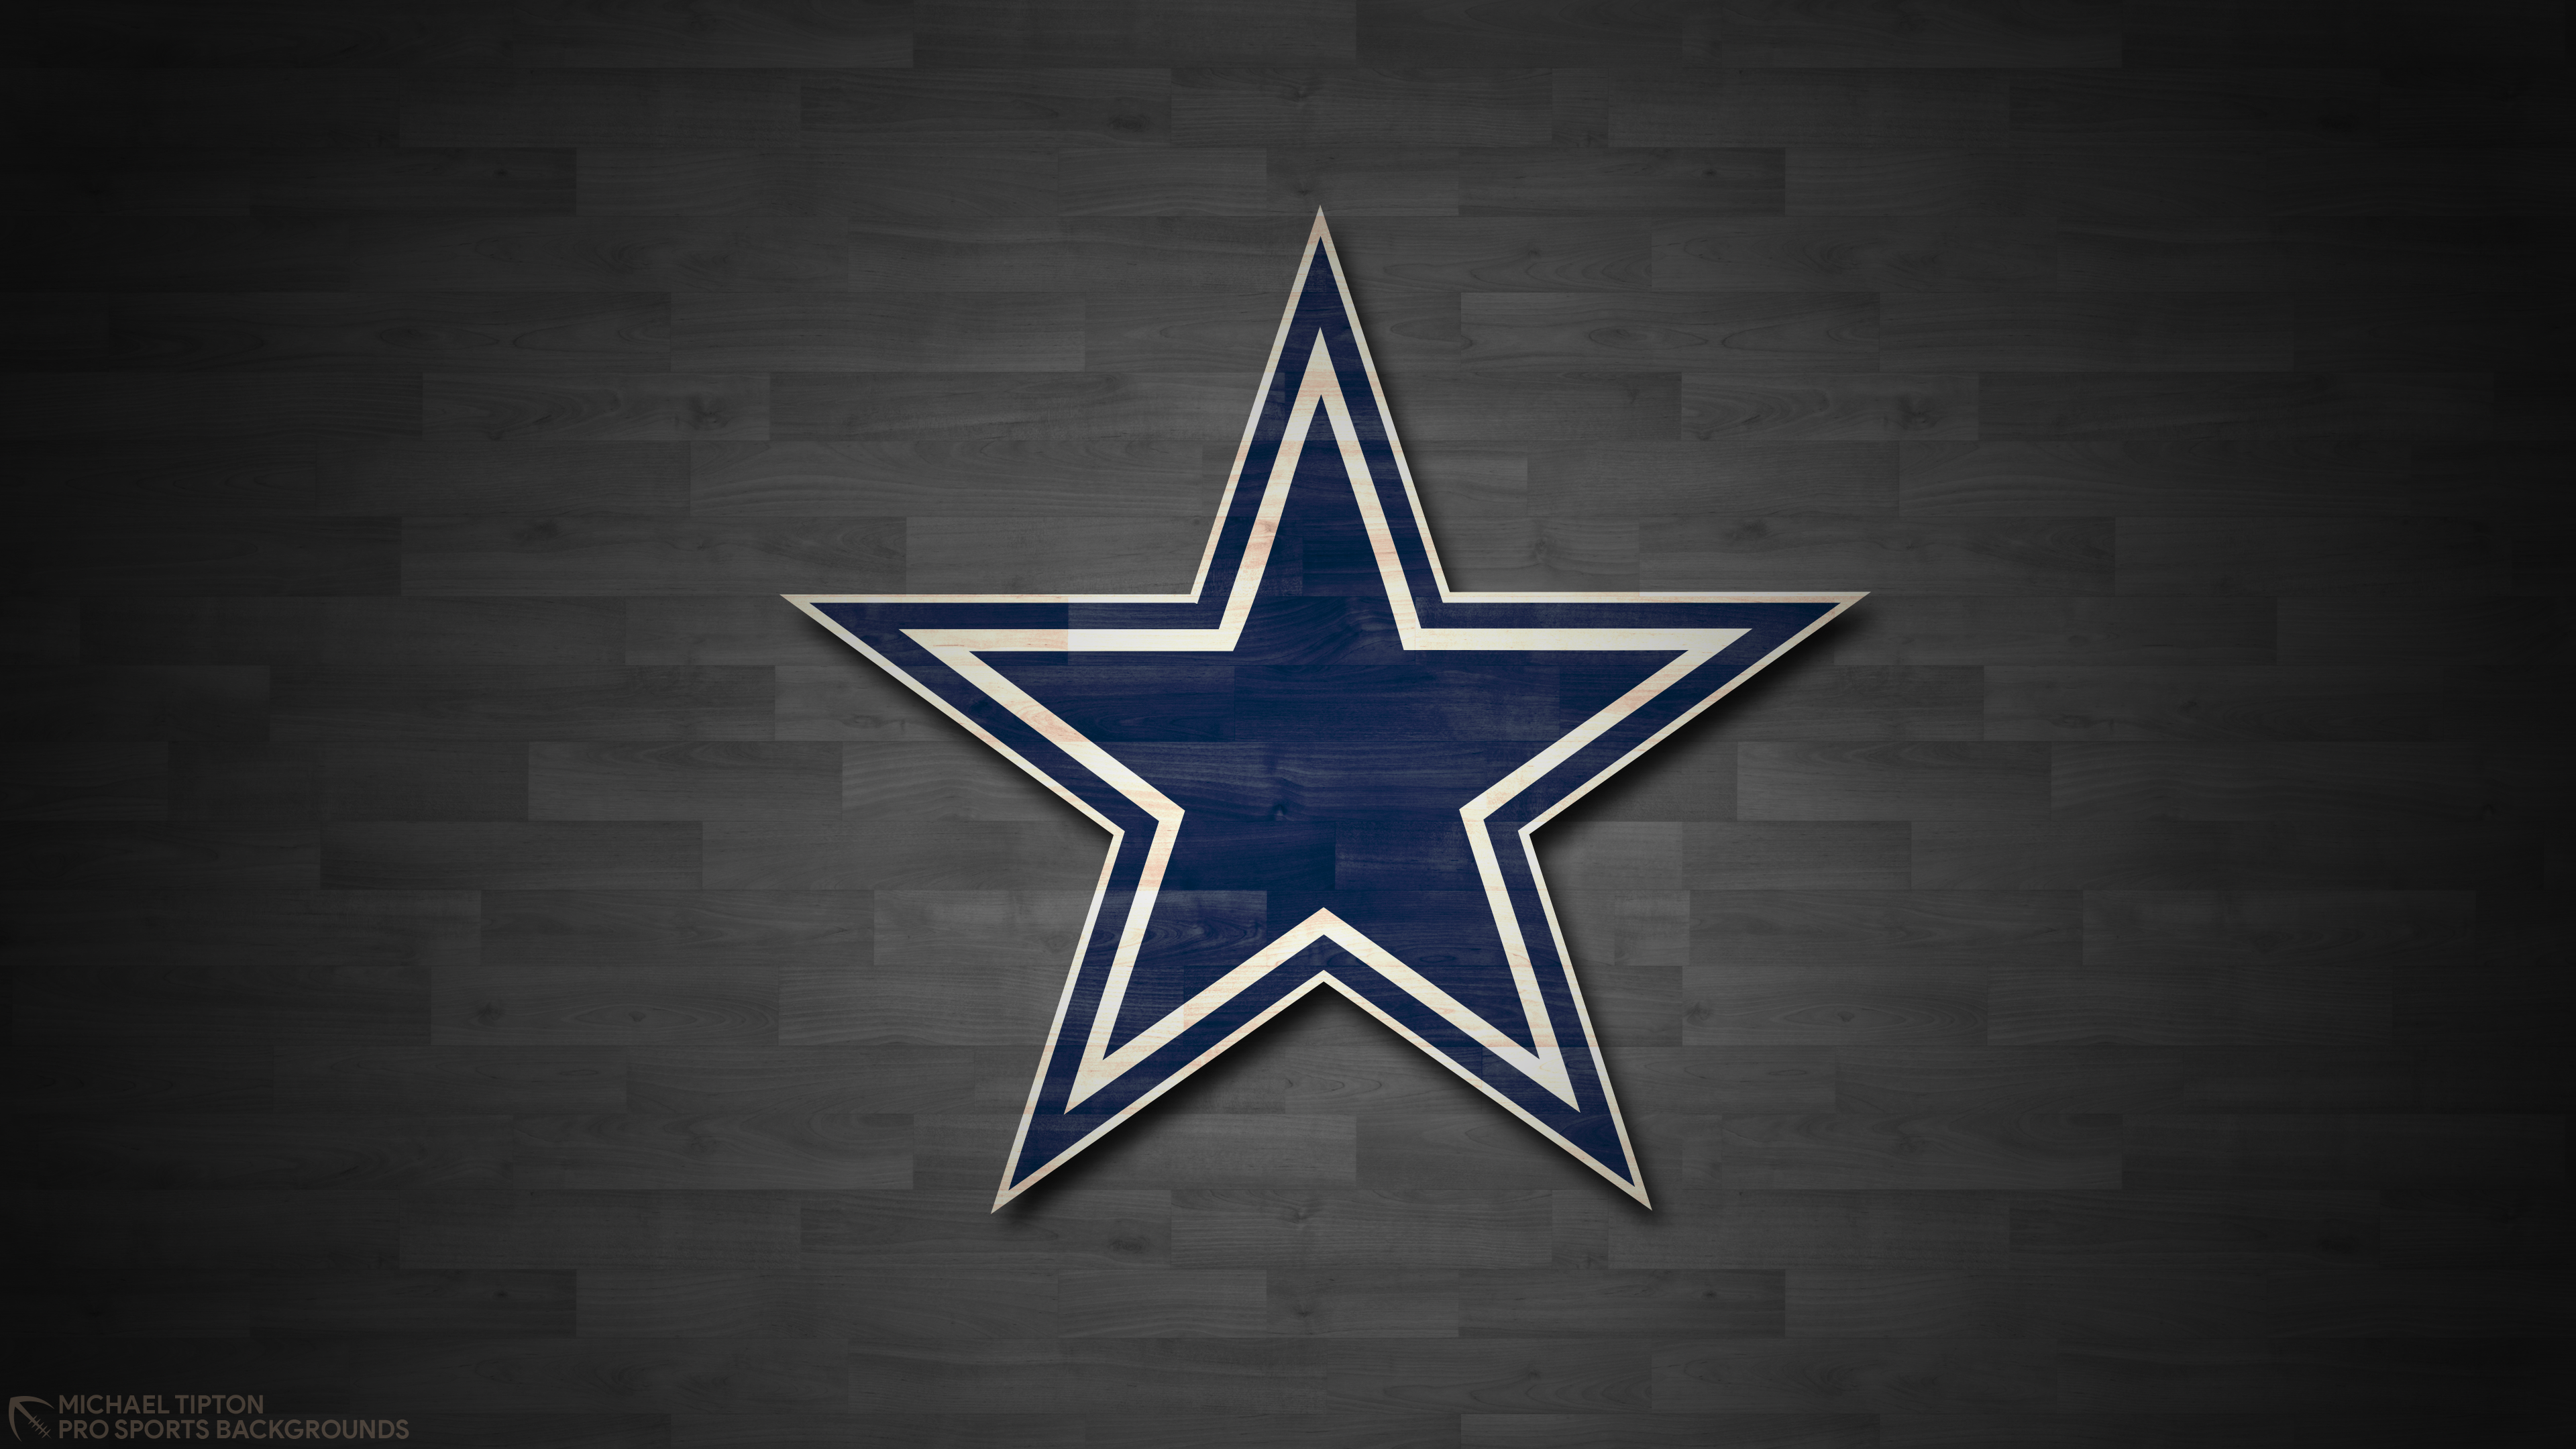 Dallas Cowboys Wallpaper. Pro Sports Background